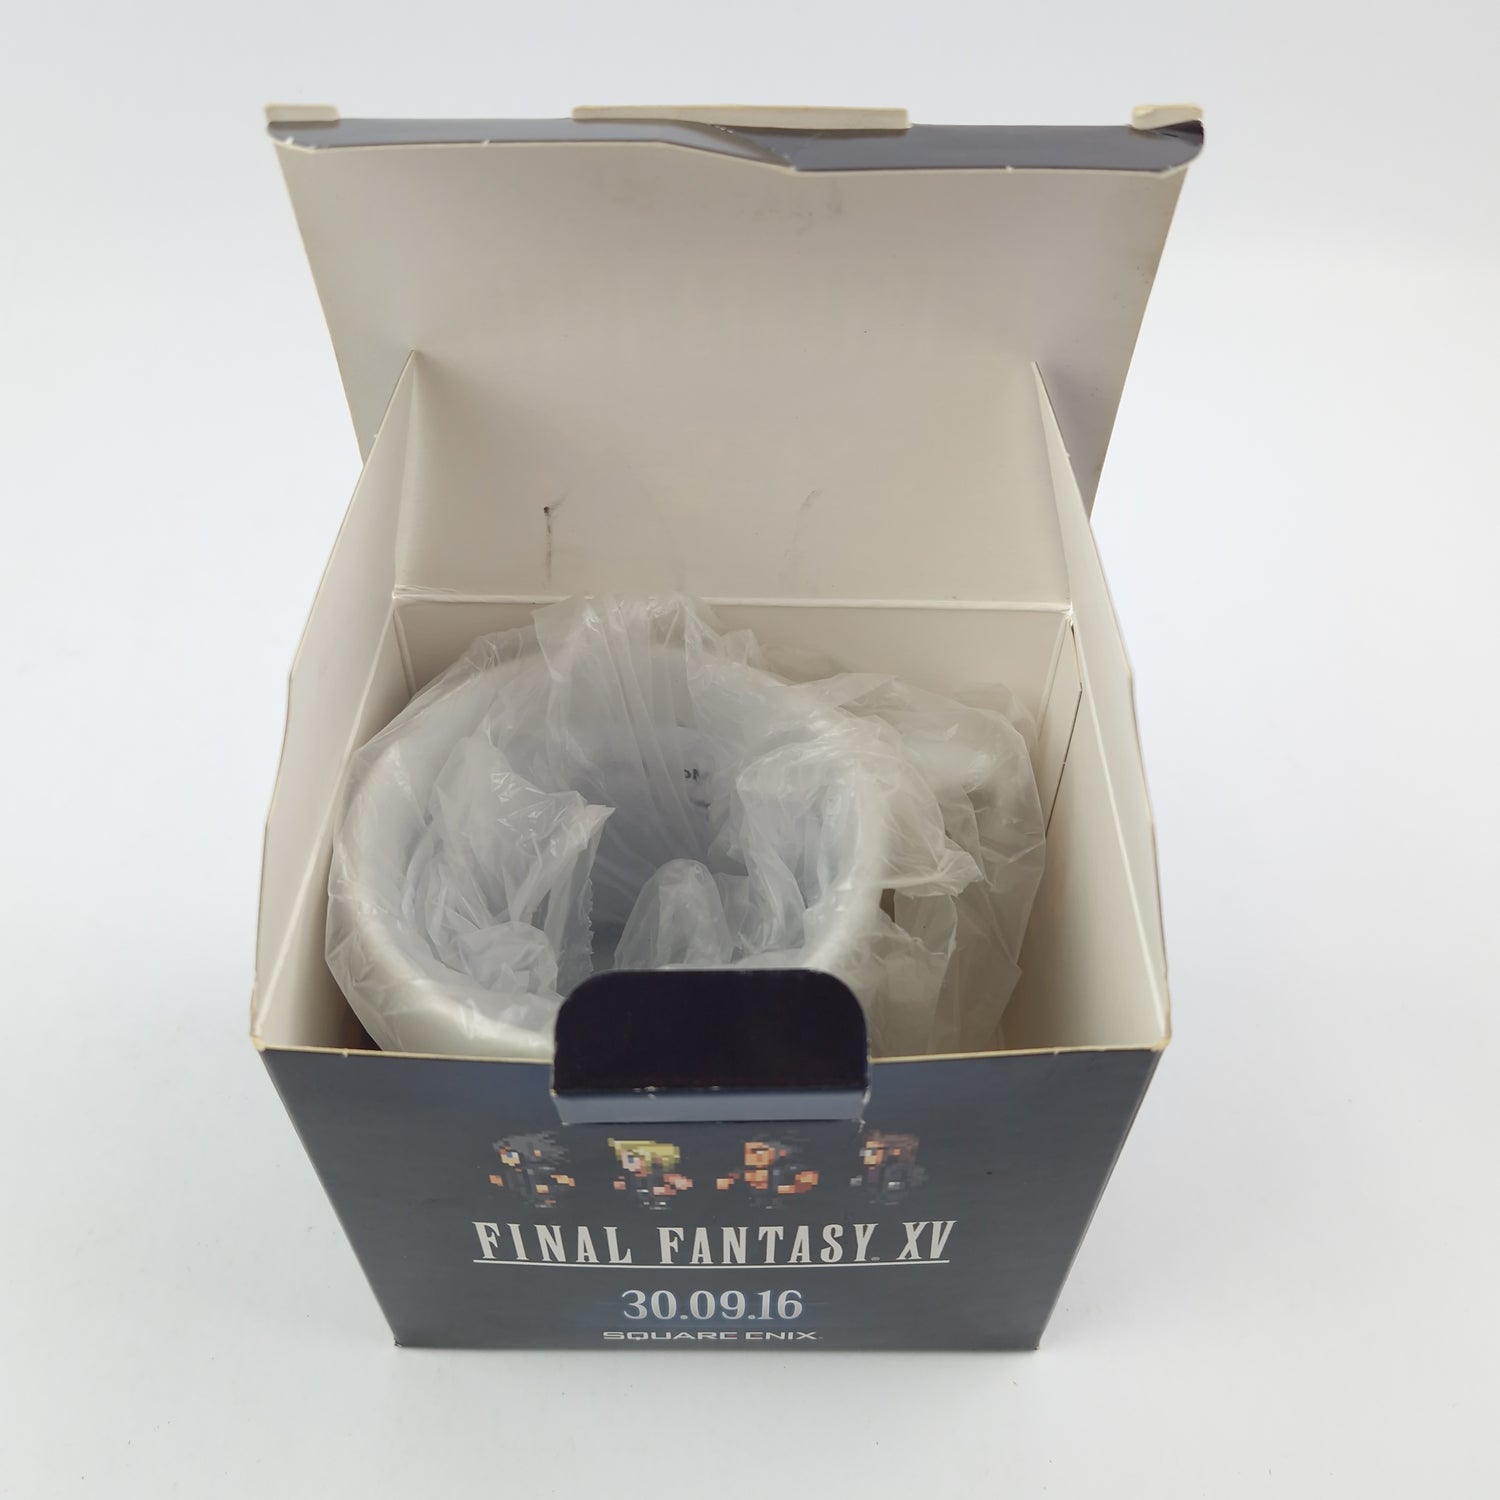 Final Fantasy XV 09/30/16 Square Enix Promo Tasse / Cup - PROMO Not for Sale